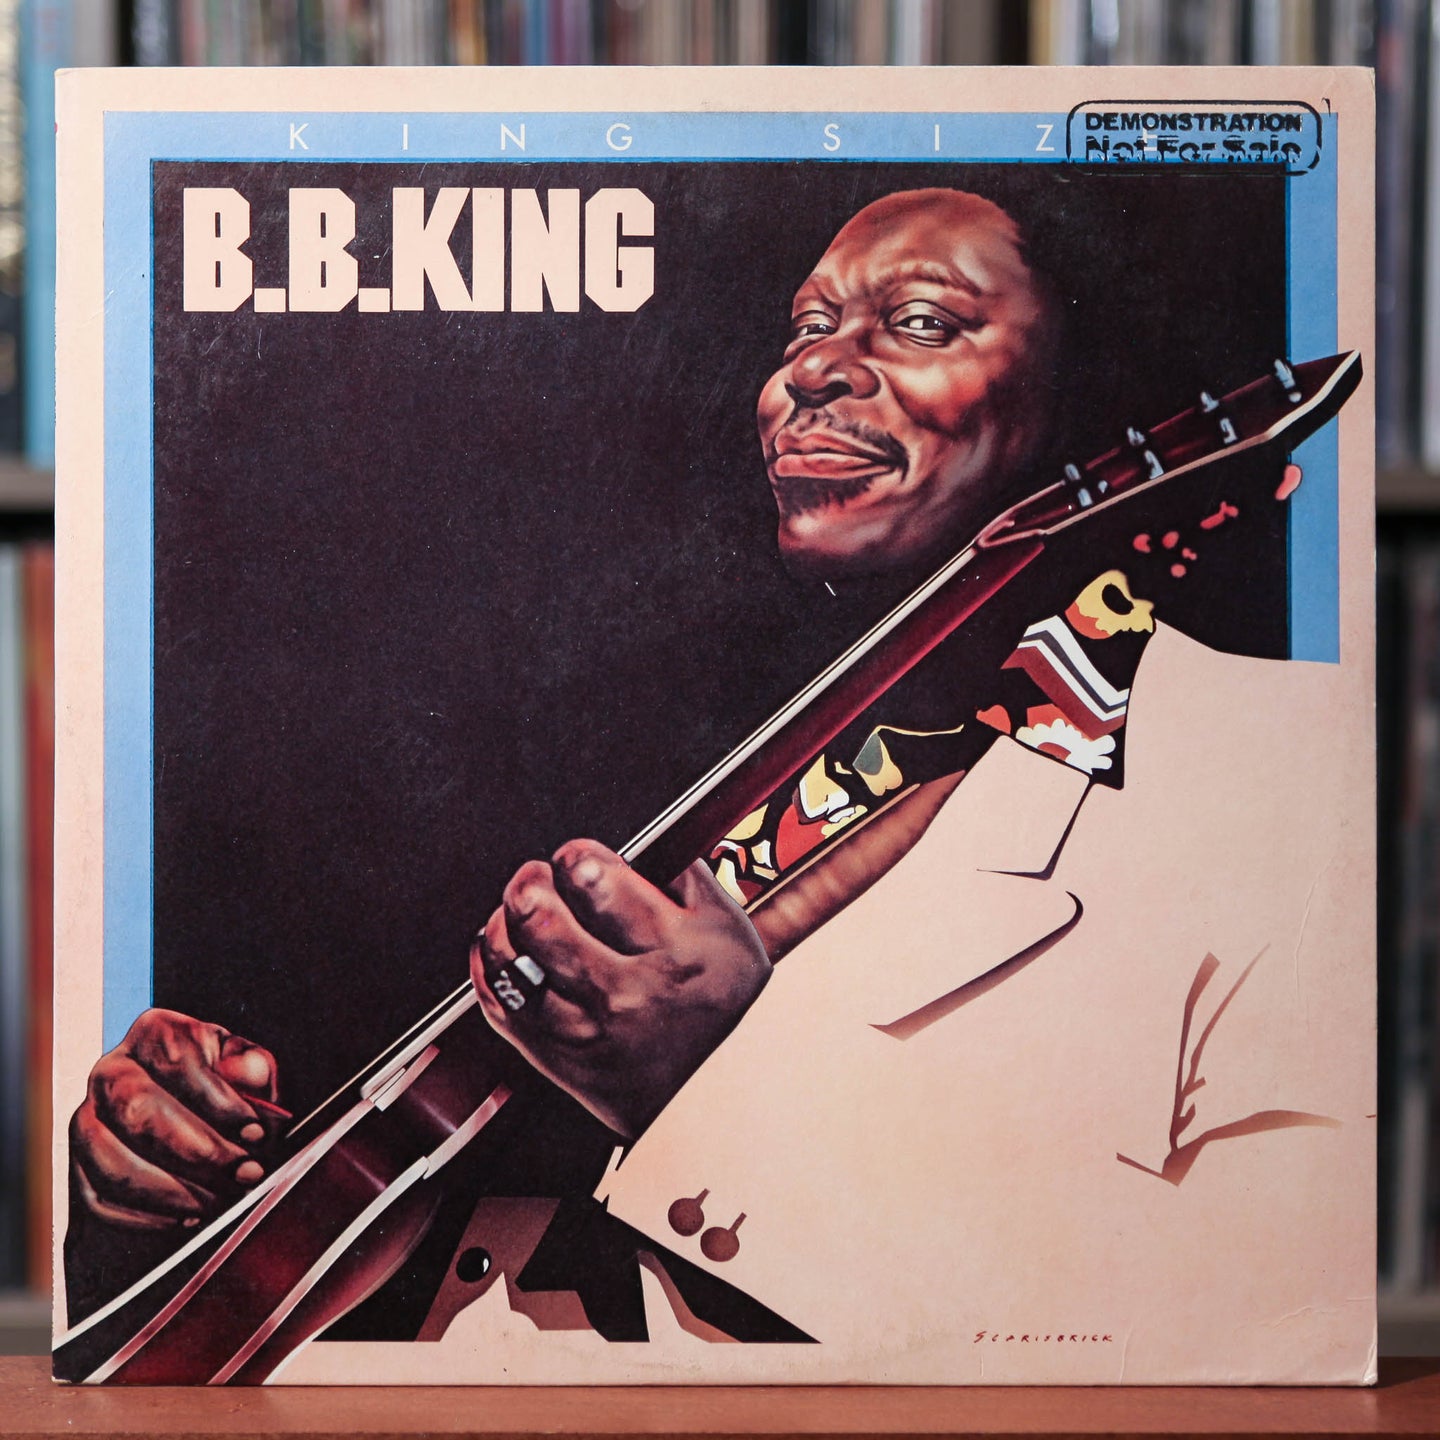 B.B. King - King Size -  Rare PROMO -1977 ABC, VG+/VG+